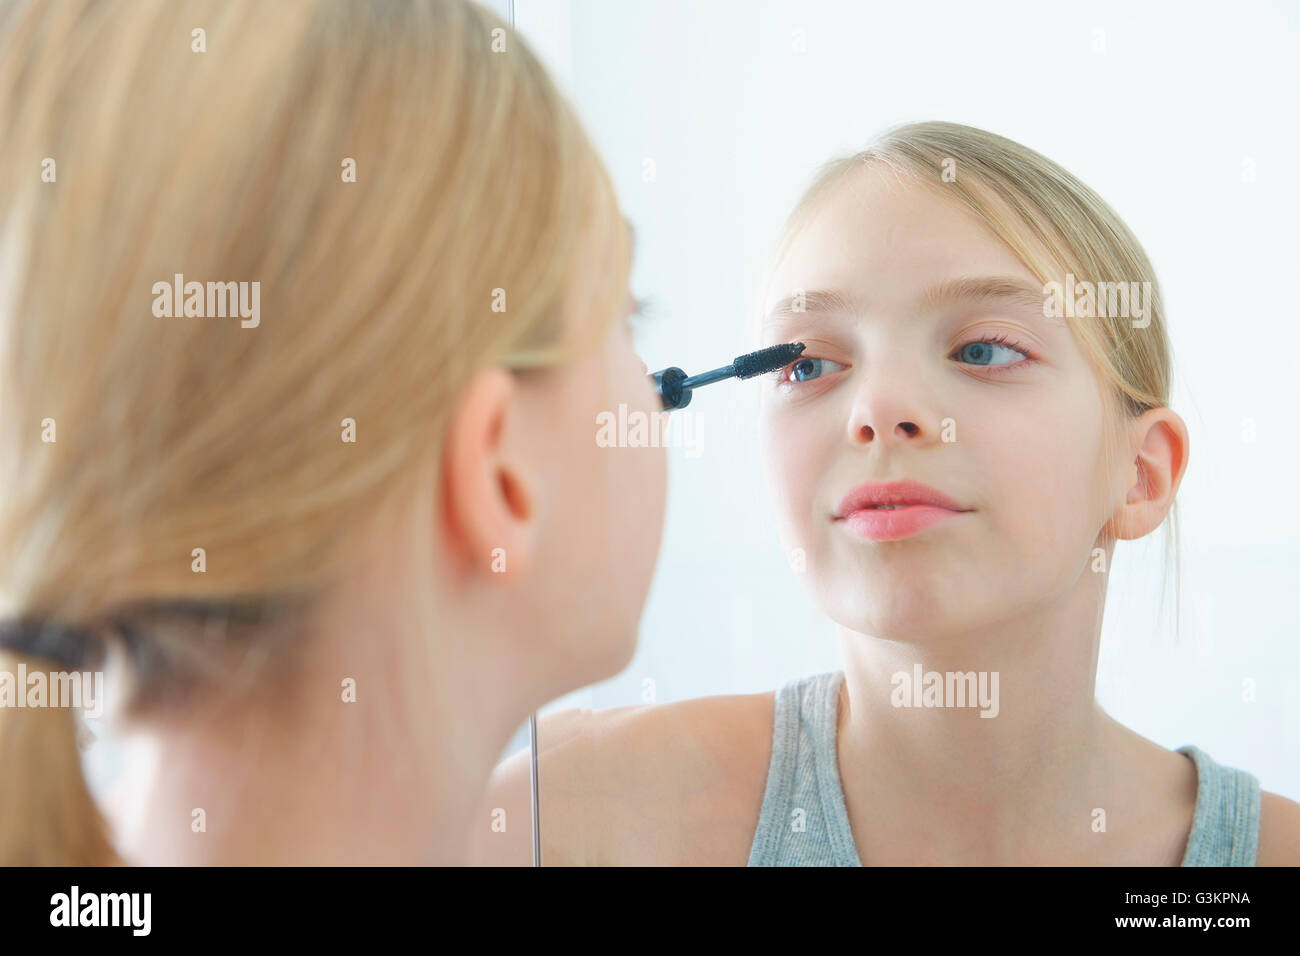 Over the shoulder mirror image of girl applying mascara Stock Photo